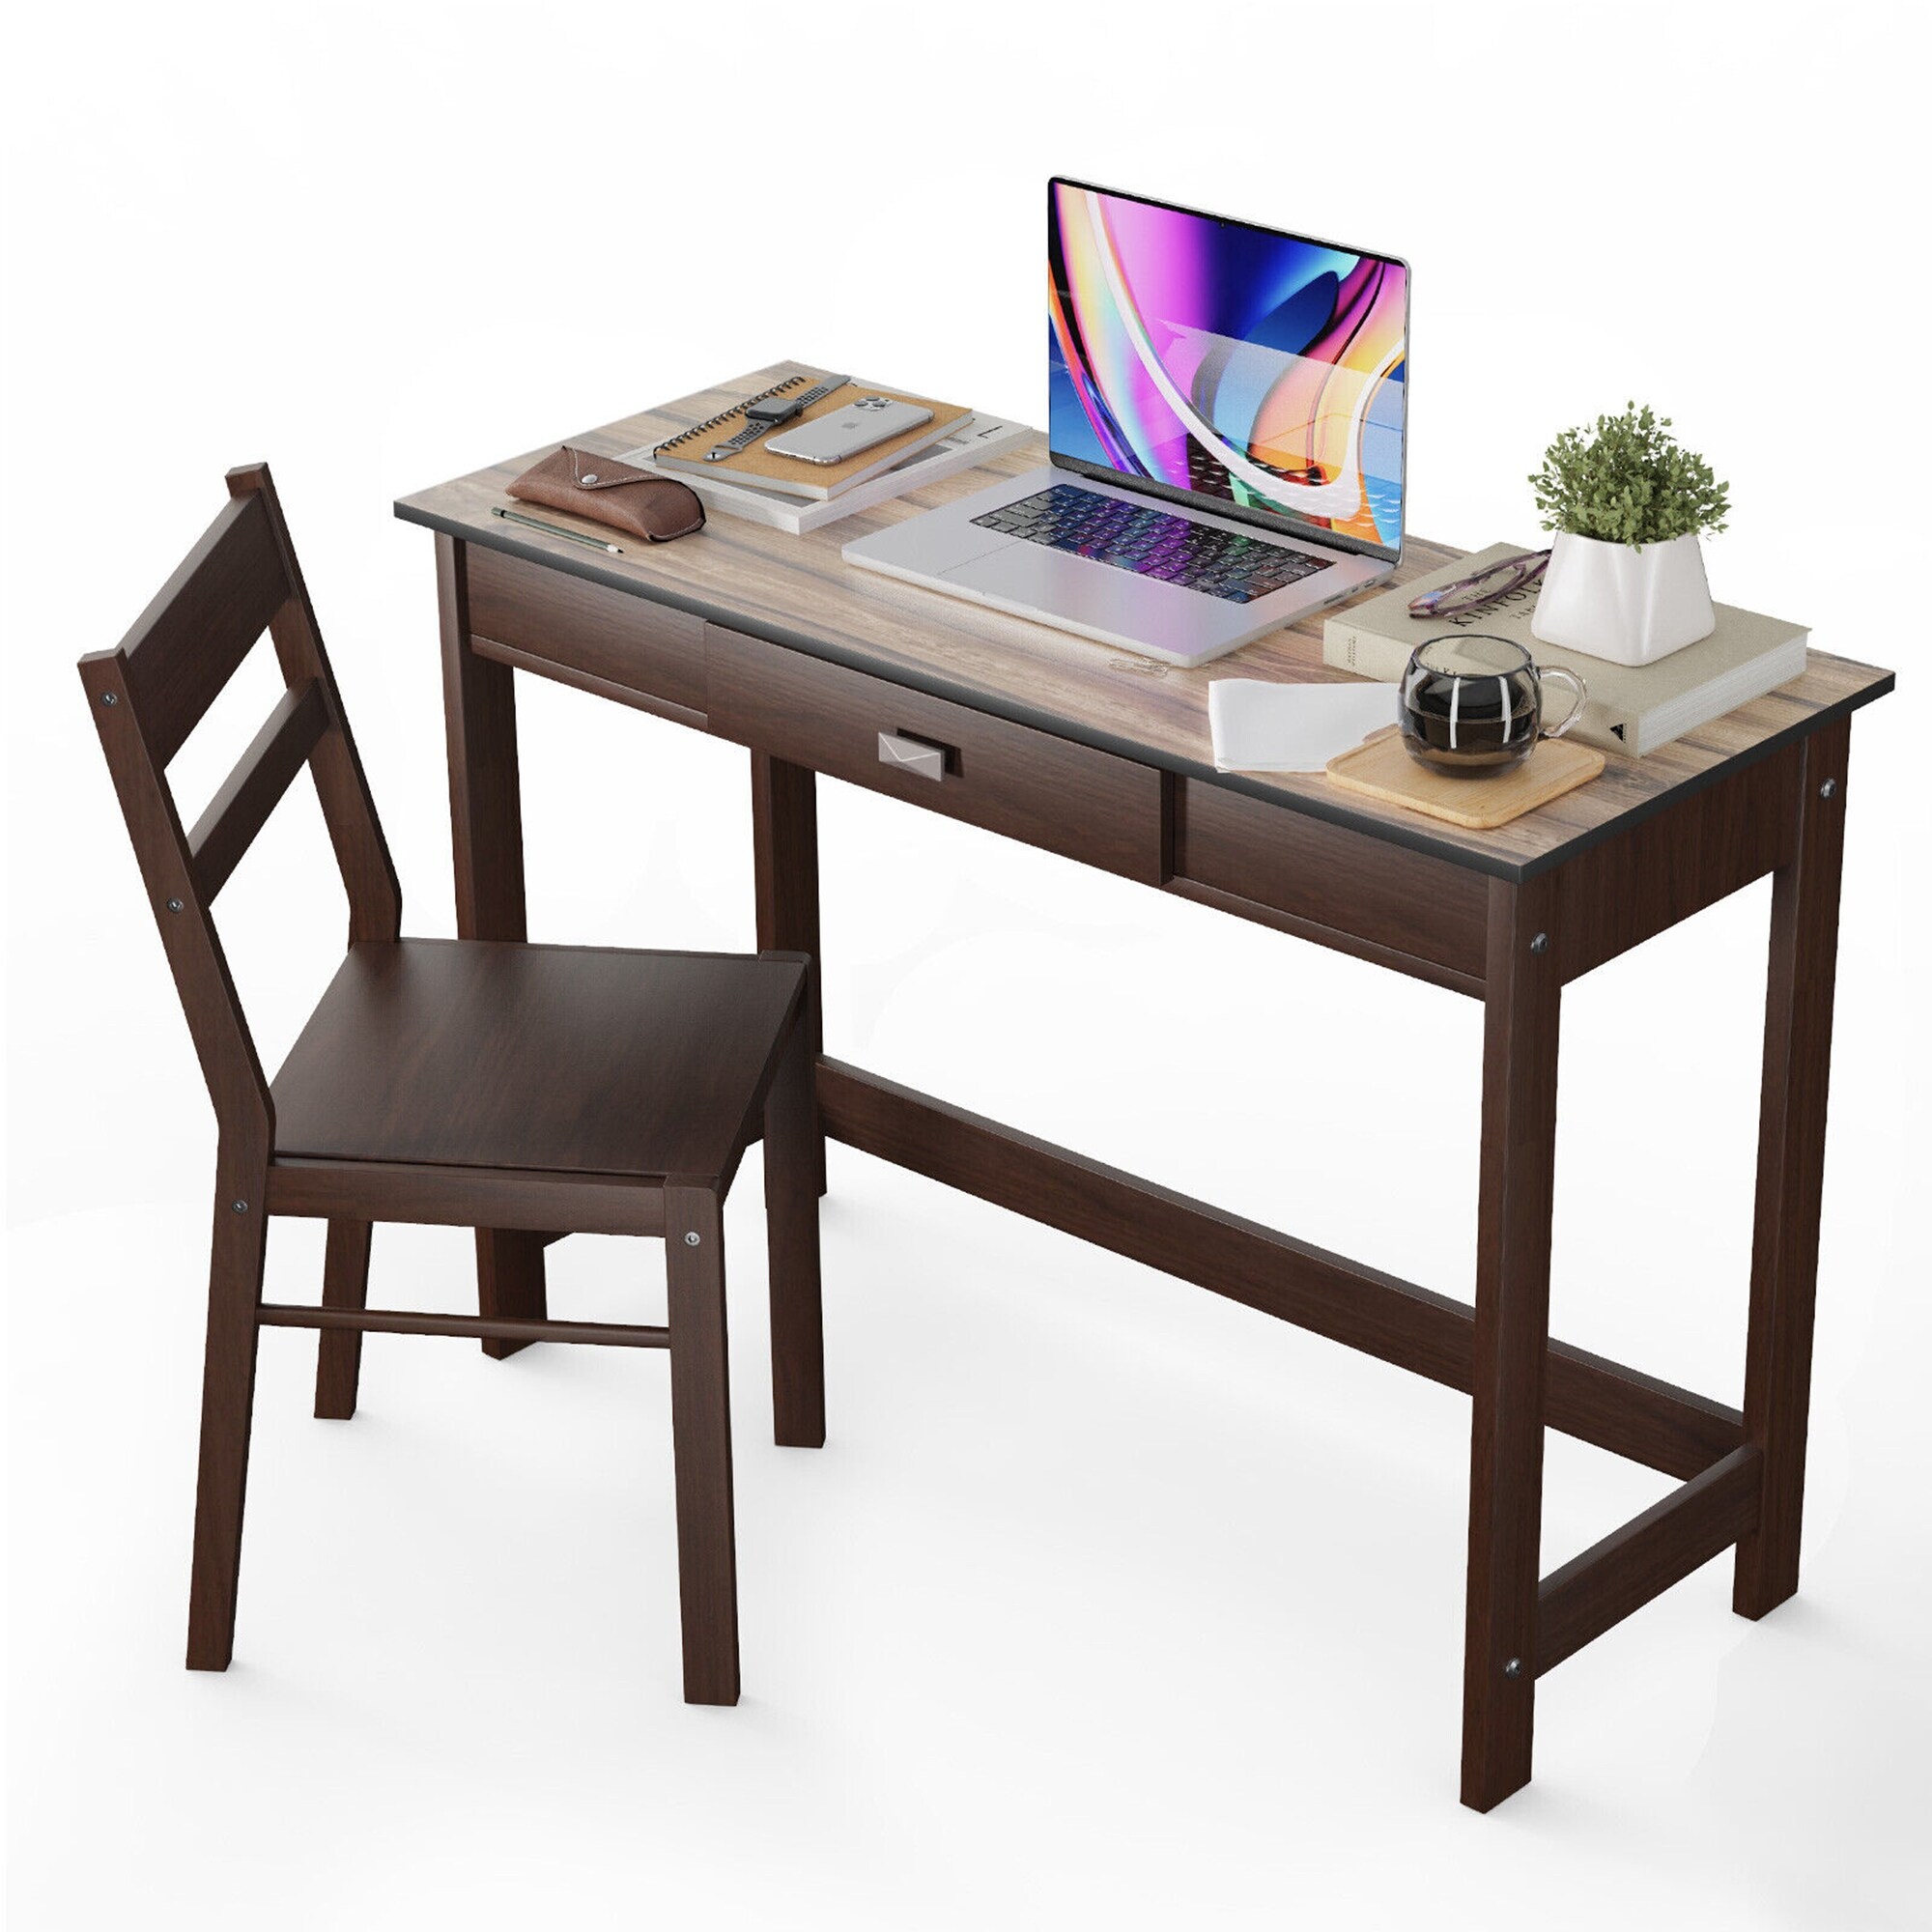 Gymax Adjustable Kids Study Desk Drafting Table Chair Set w/ Bookshelf Blue